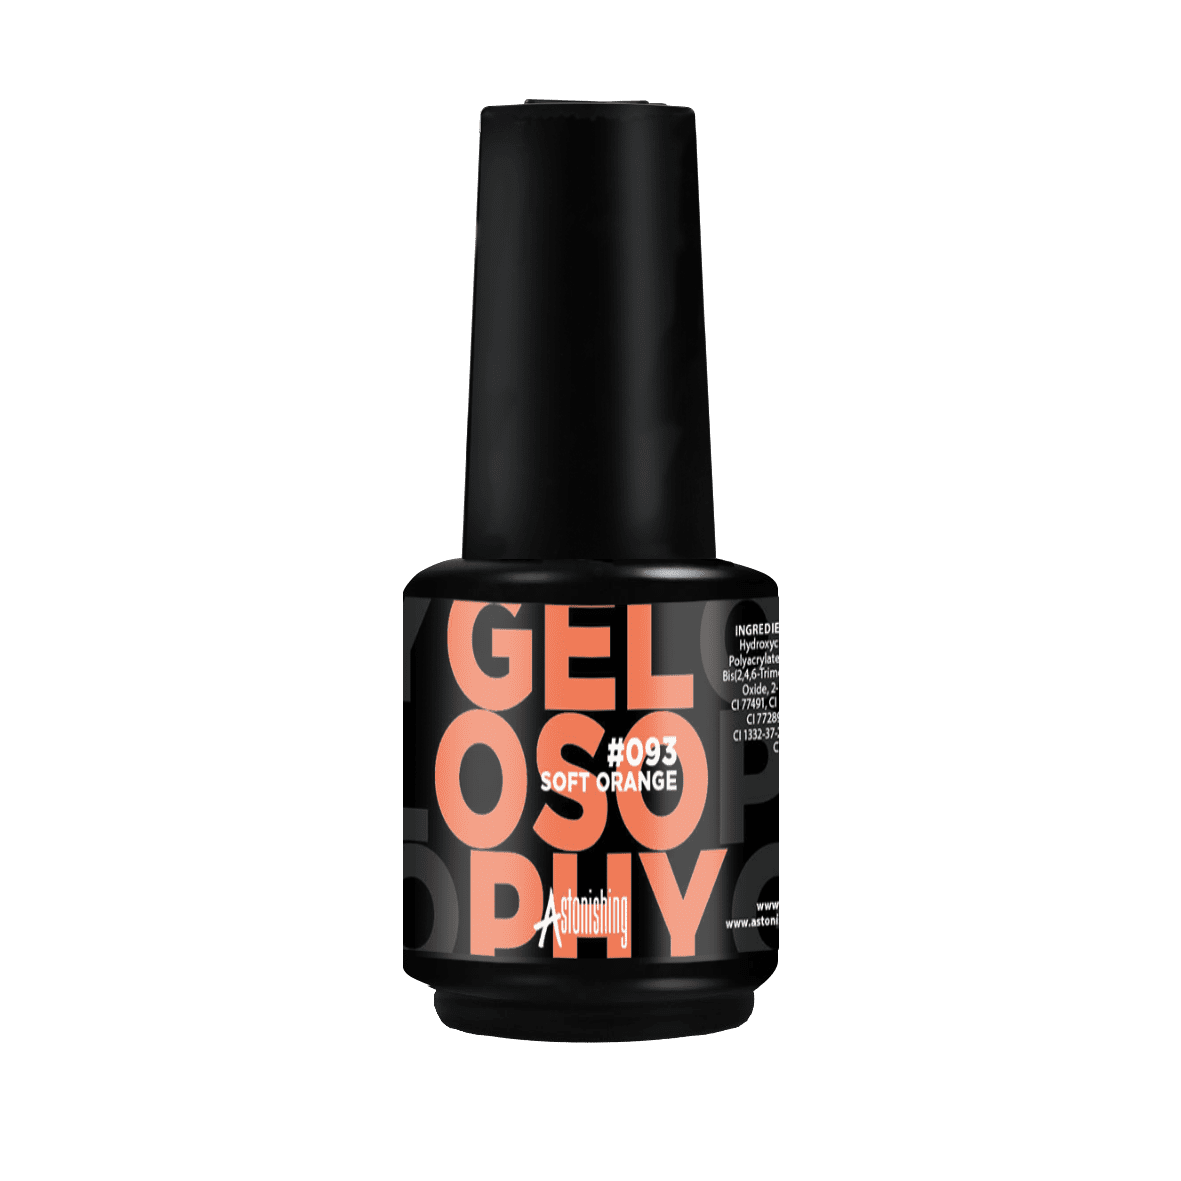 Gelosophy #093 Soft Orange 15ml